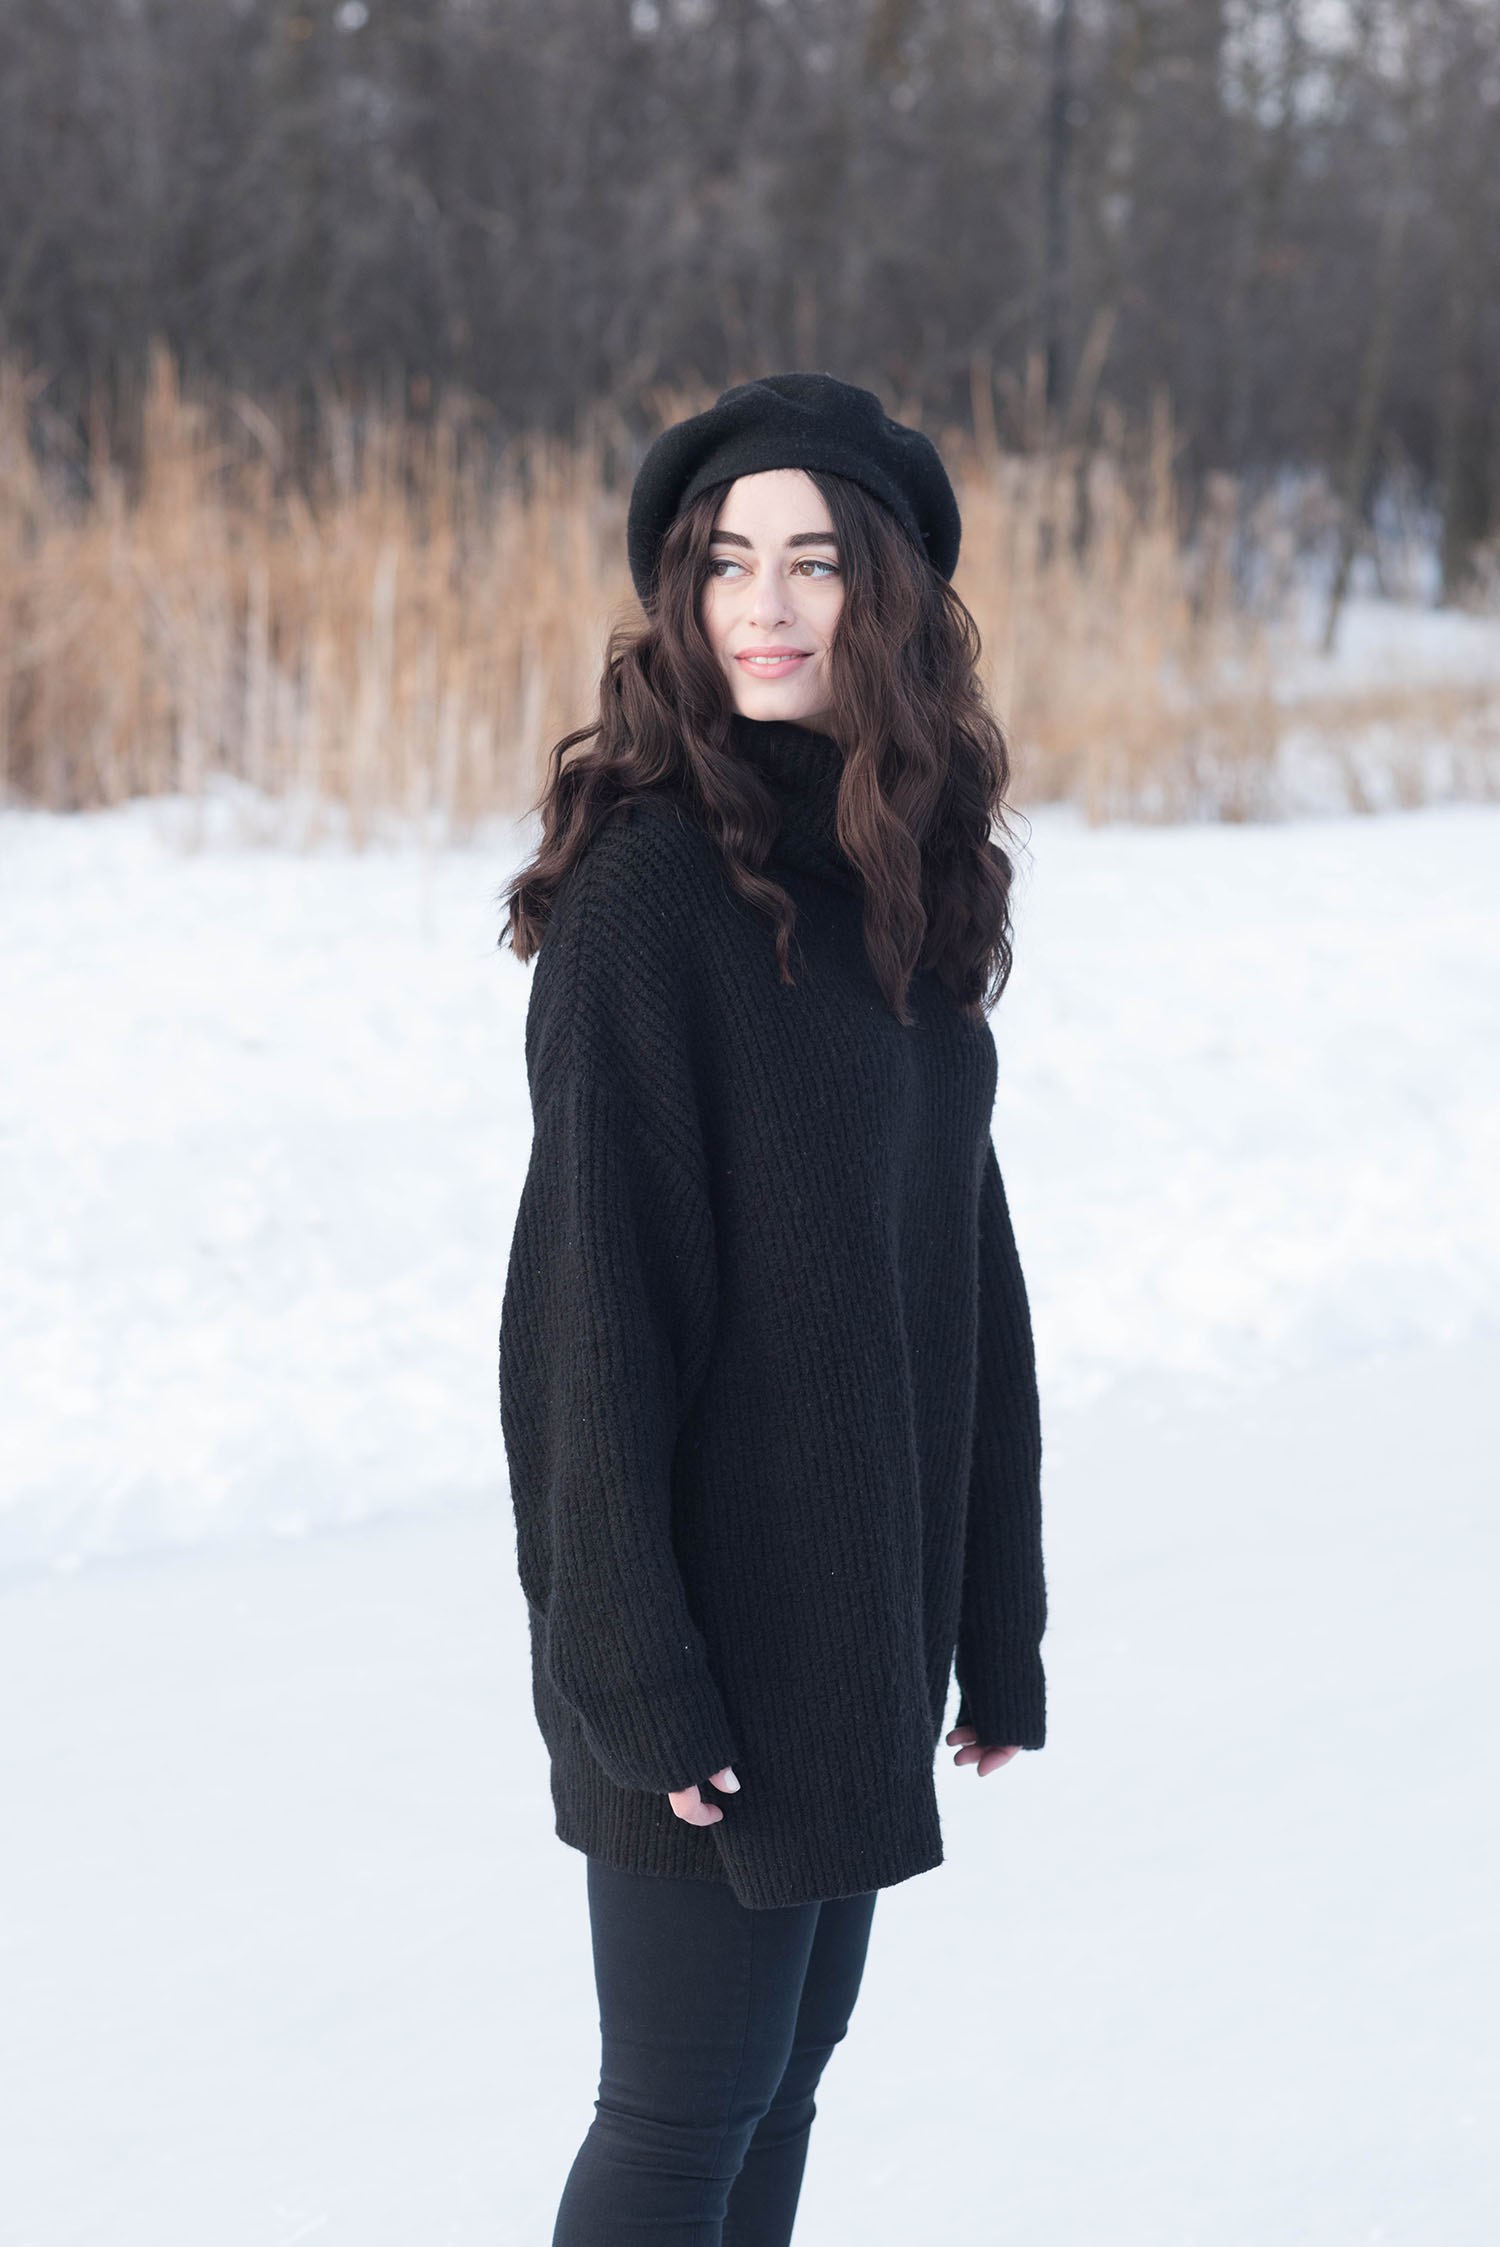 Portrait of Winnipeg fashion blogger Cee Fardoe of Coco & Vera at Assiniboine park wearing an Anthropologie Bonnie beret and black Zara sweater